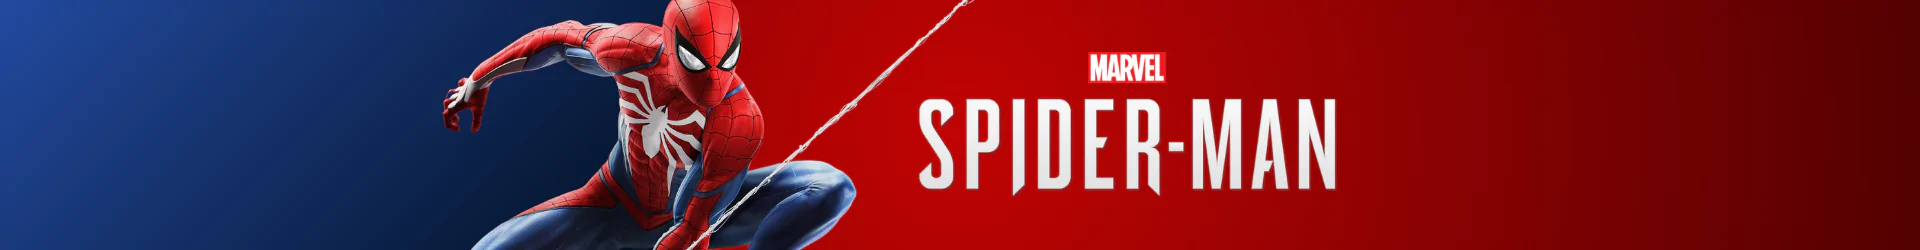 Spider-Man gift sets banner